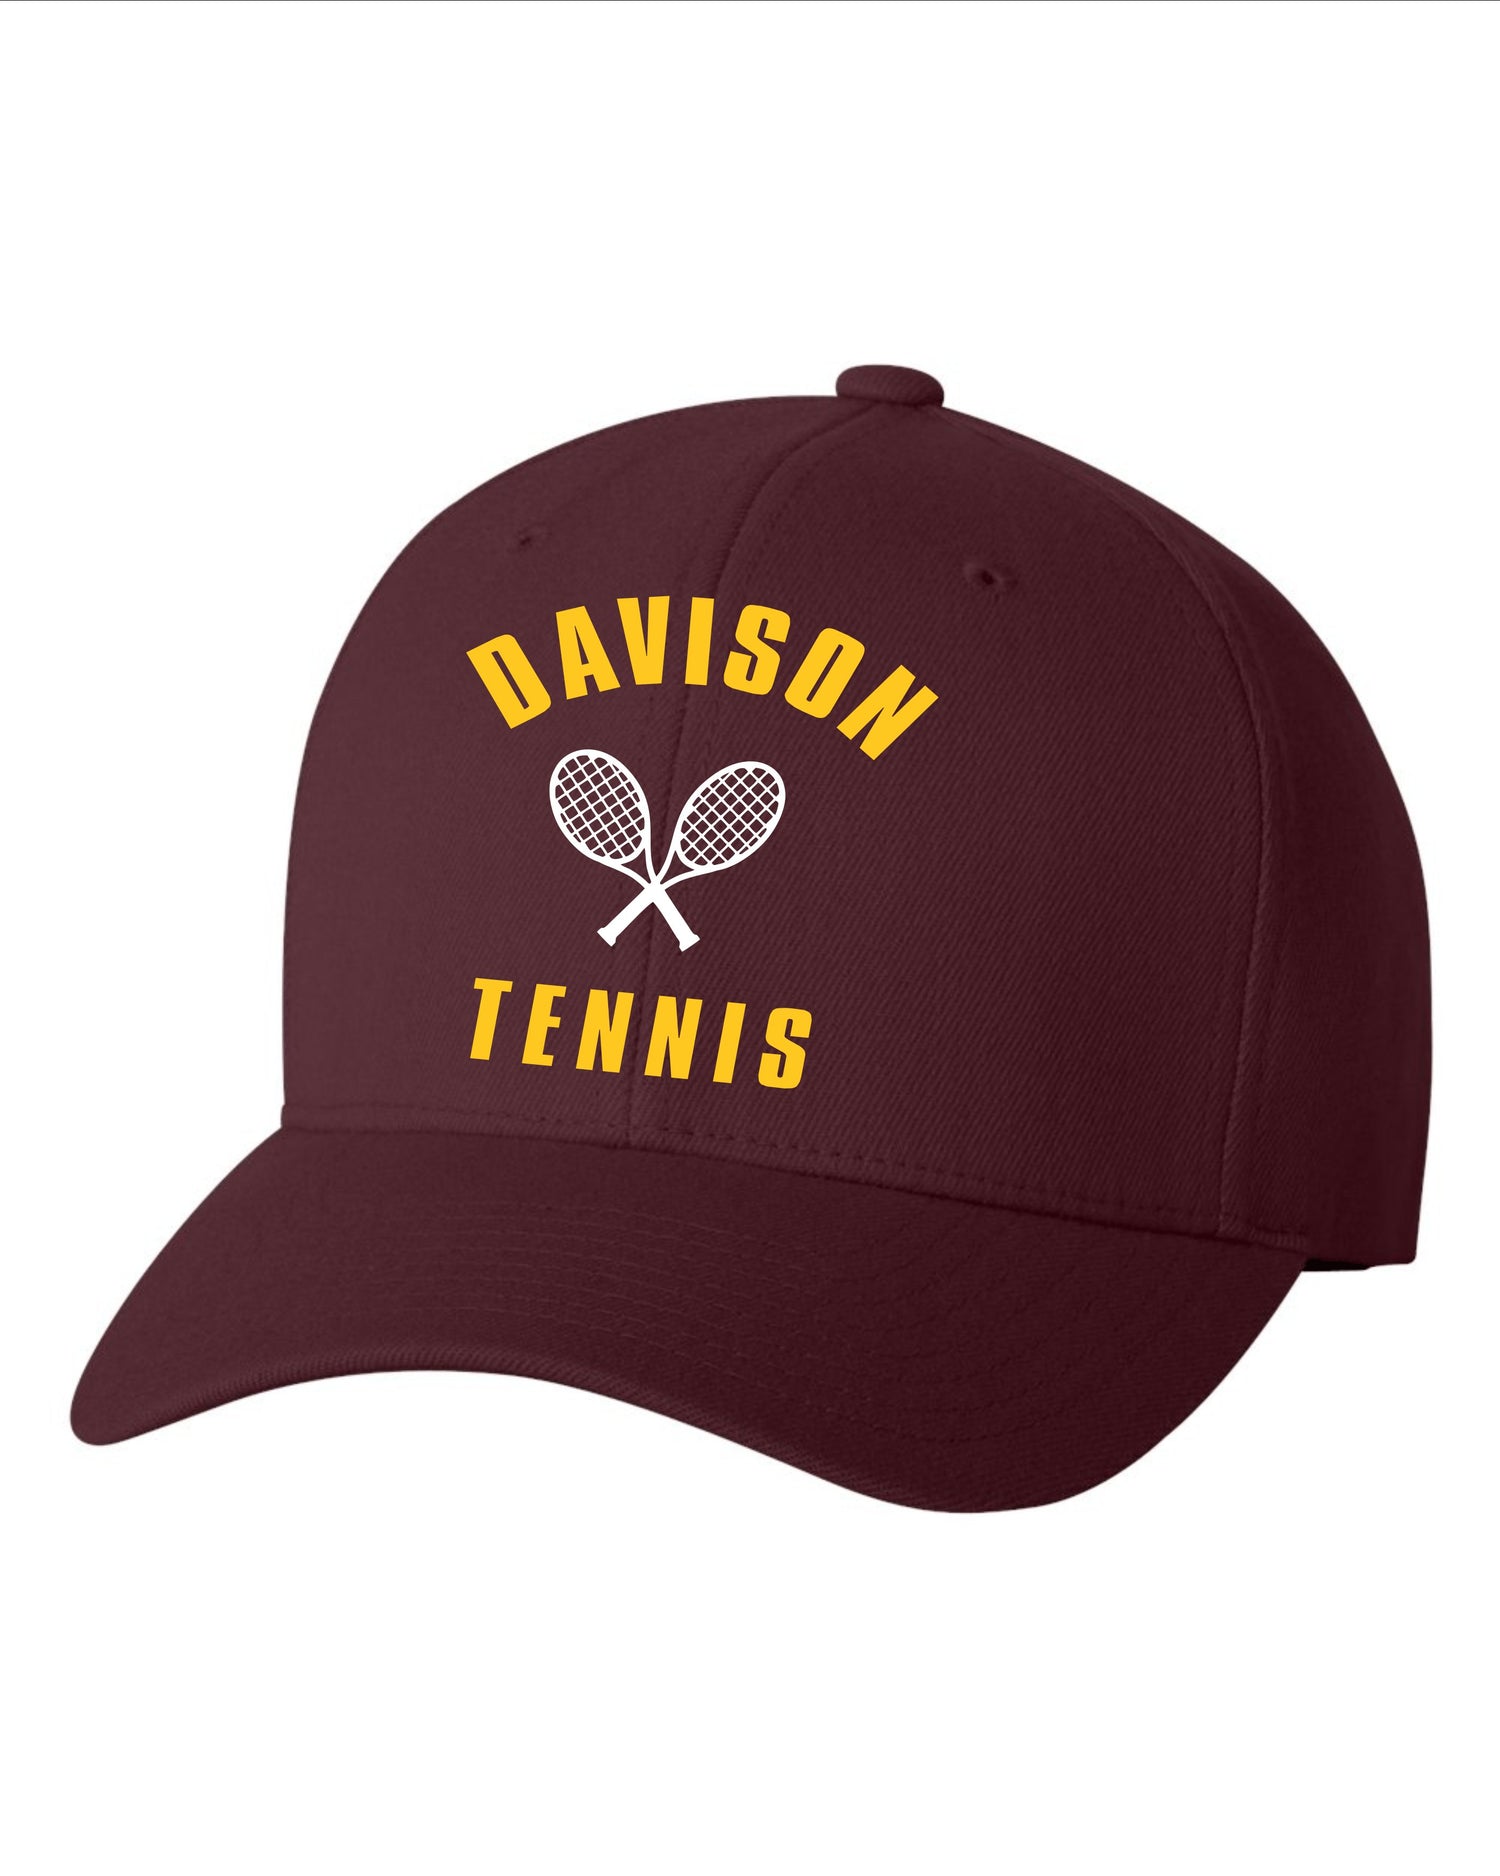 Davison Tennis